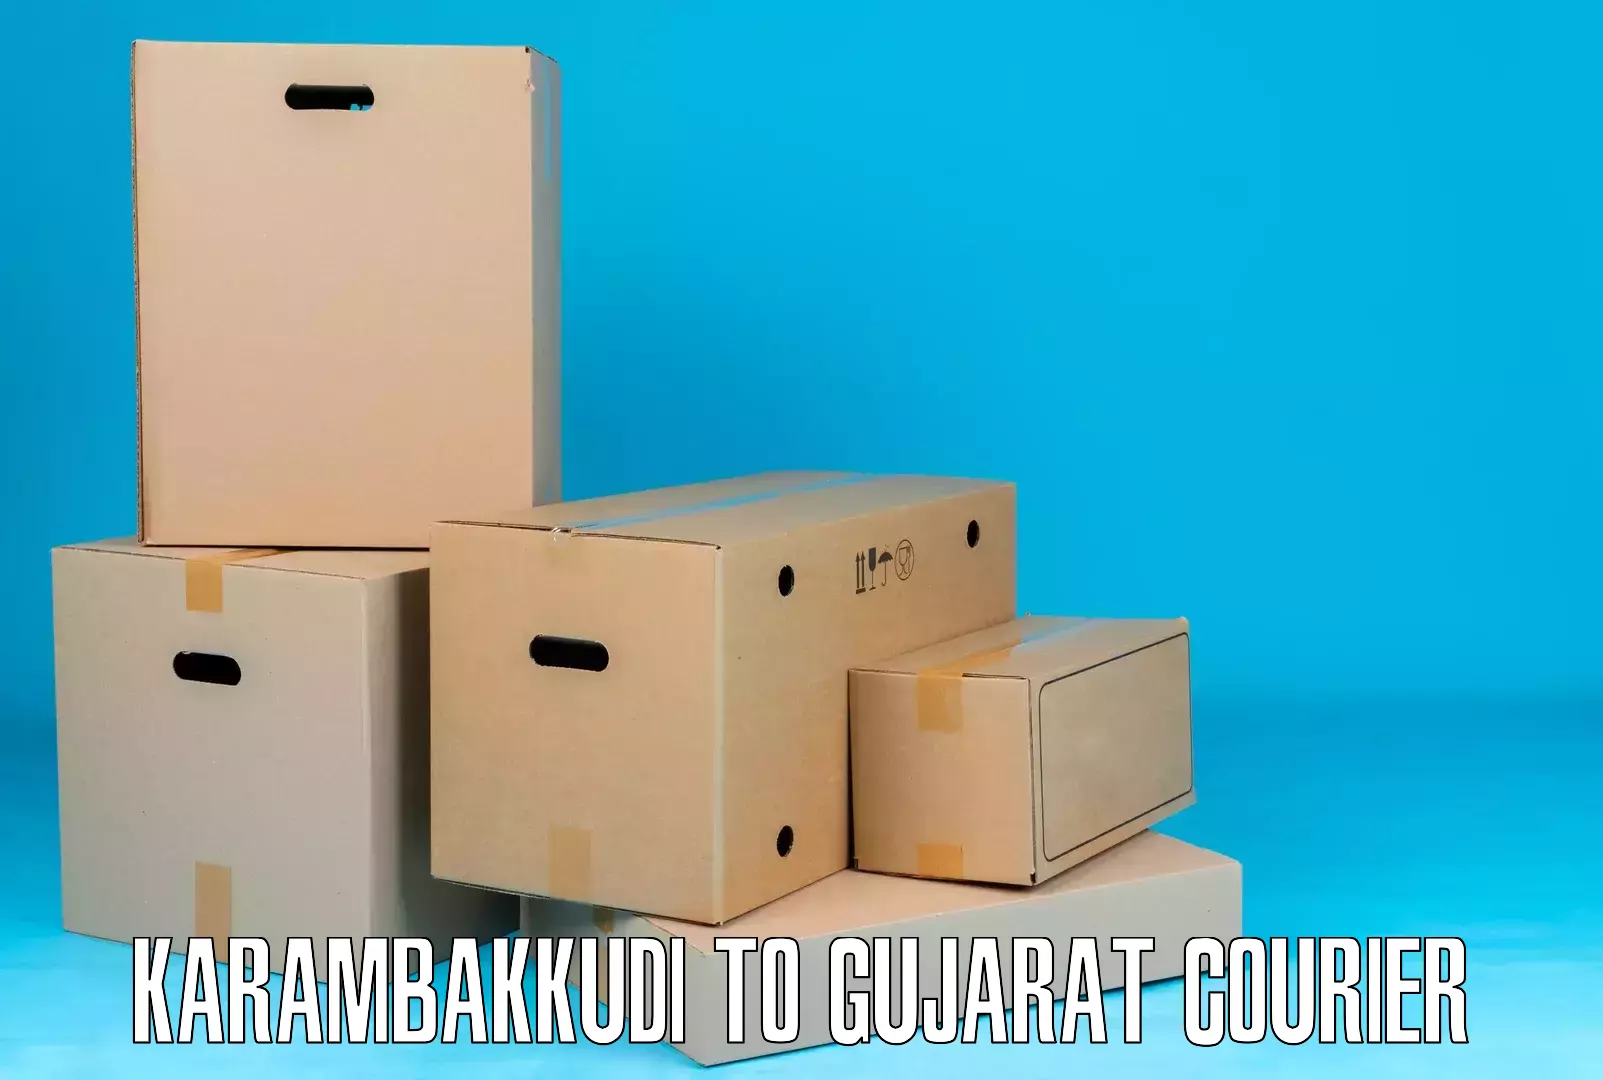 Cargo delivery service Karambakkudi to Surat